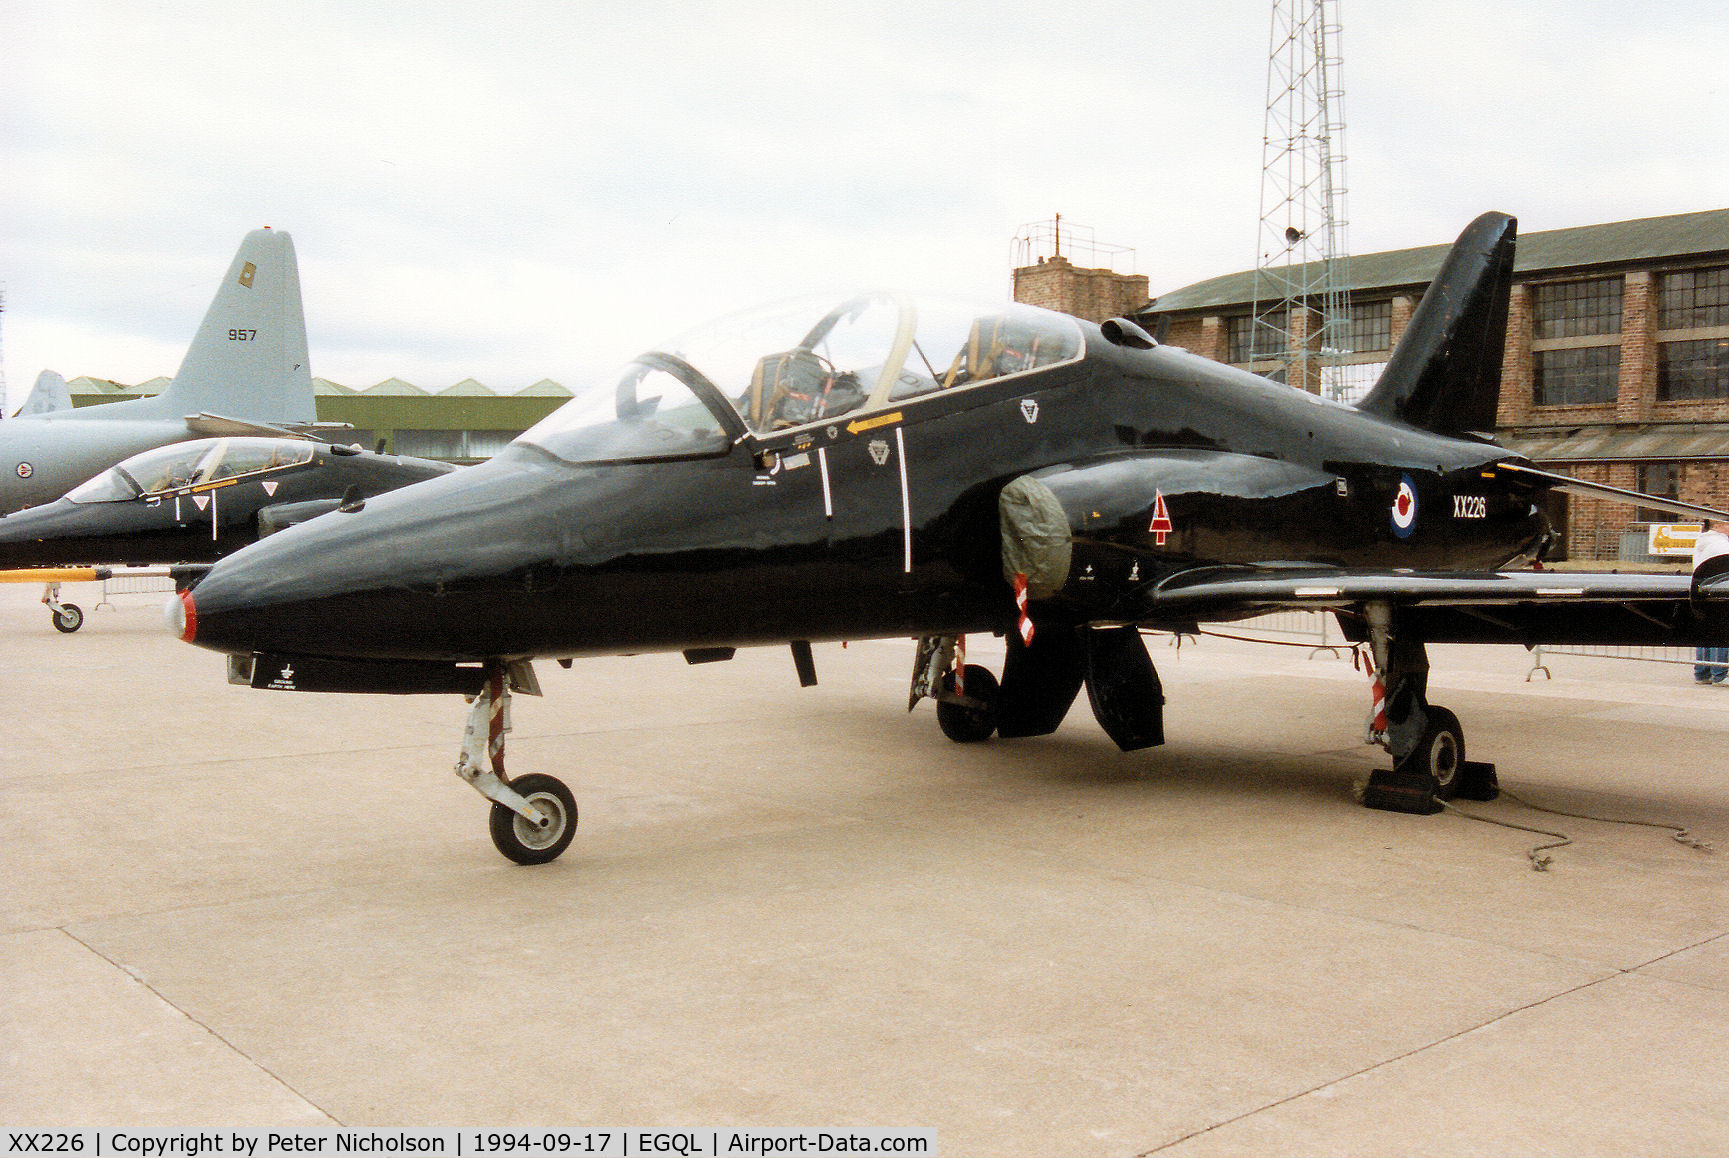 XX226, 1978 Hawker Siddeley Hawk T.1 C/N 062/312062, Hawk T.1 of 74(Reserve) Squadron at RAF Valley on display at the 1994 RAF Leuchars Airshow.